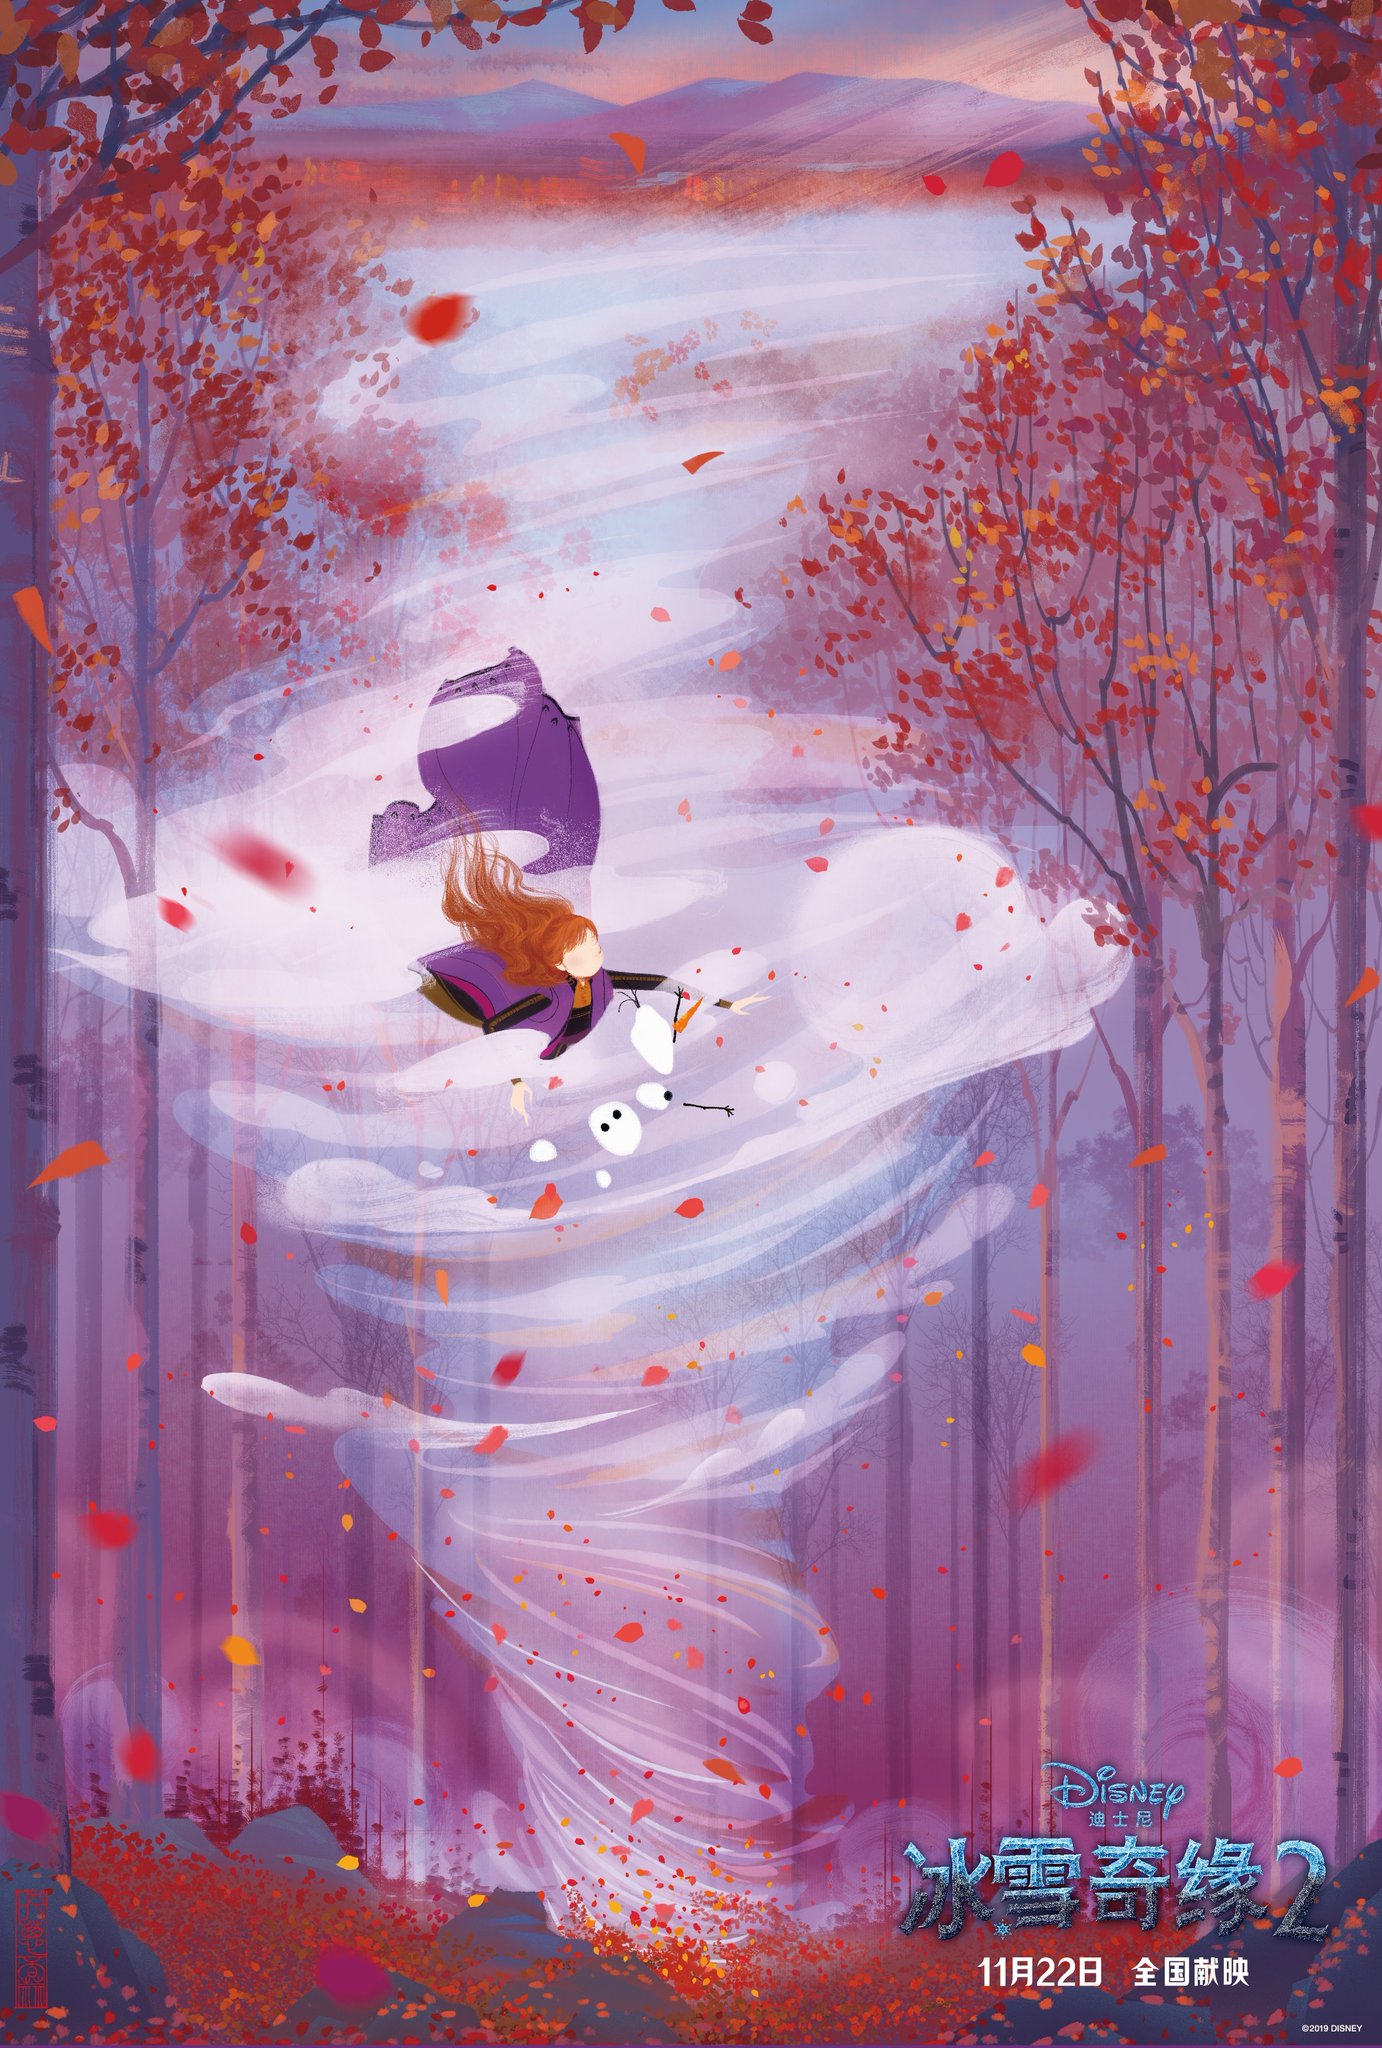  La Reine des Neiges II [Walt Disney Animation Studios - 2019] - Page 34 Frozen-2-Chinese-Poster-frozen-43109994-1382-2048